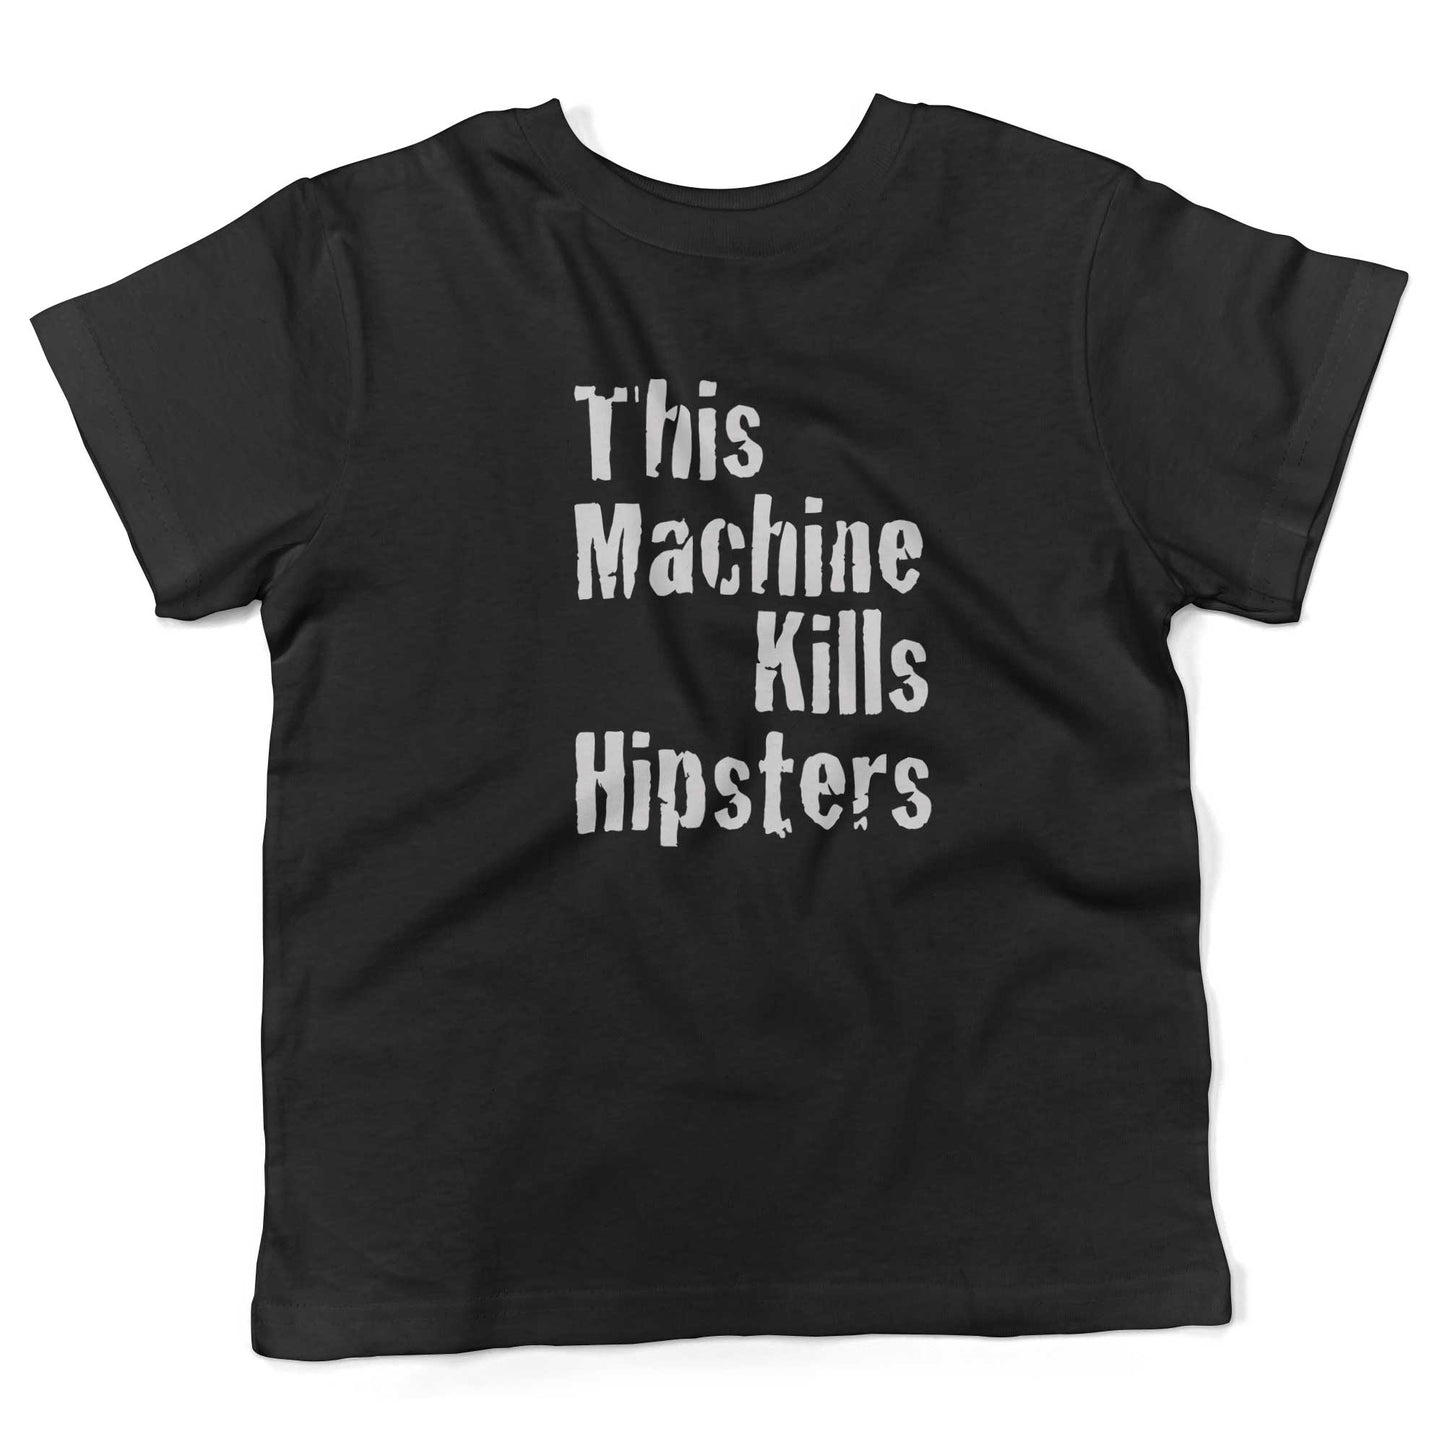 This Machine Kills Hipsters Toddler Shirt-Organic Black-2T